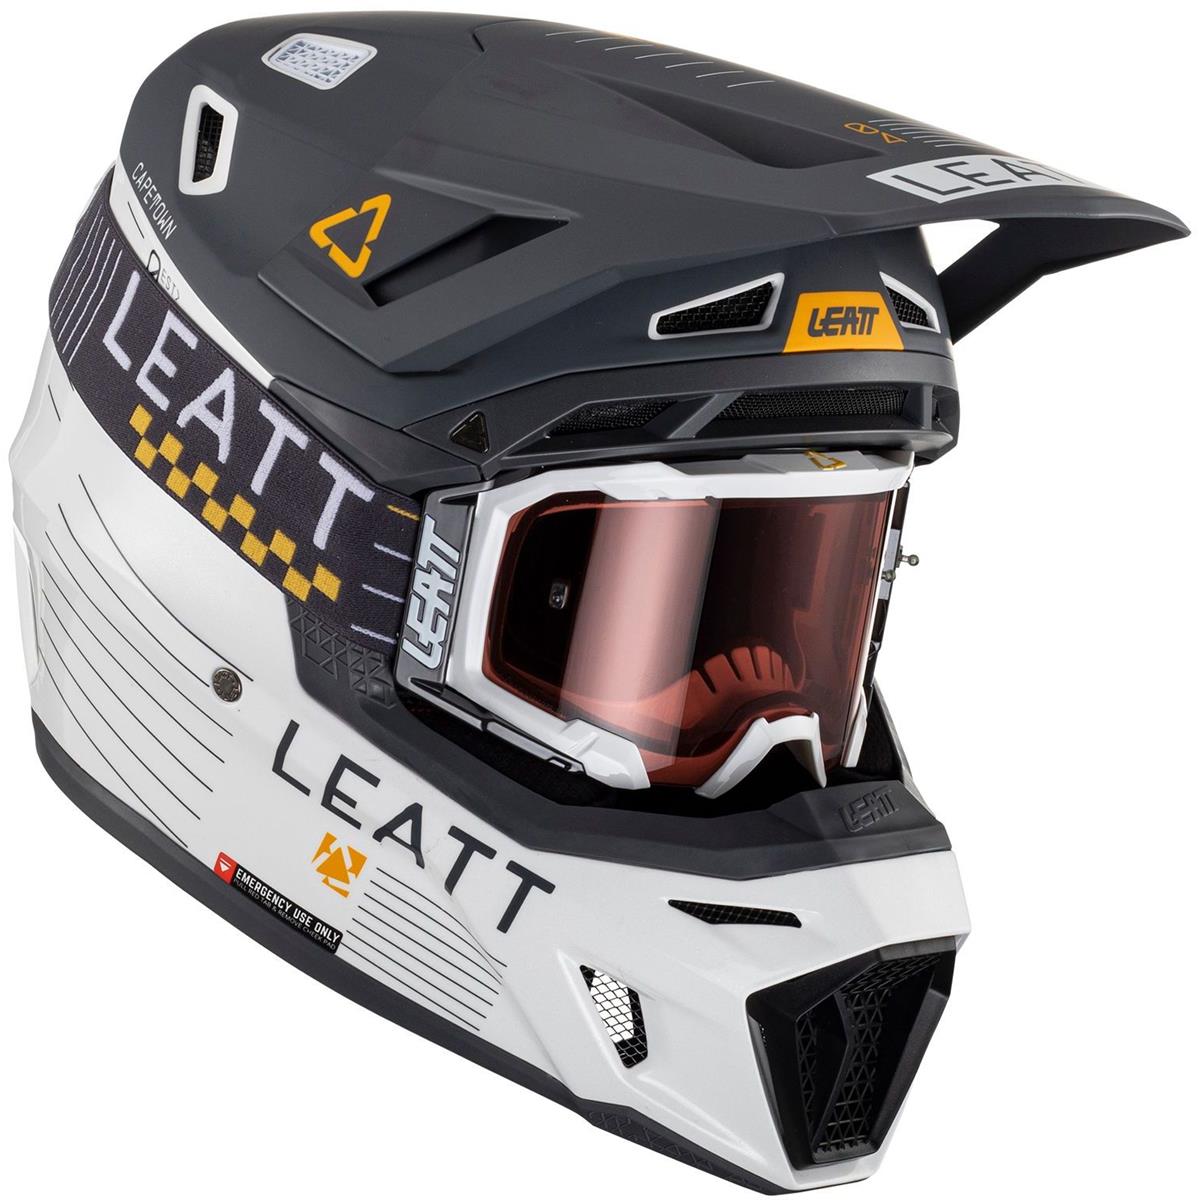 Just 1 Racing® E-Commerce Official website - Helmets, Goggles, Gear -  OFF-Road, MTB, Downhill